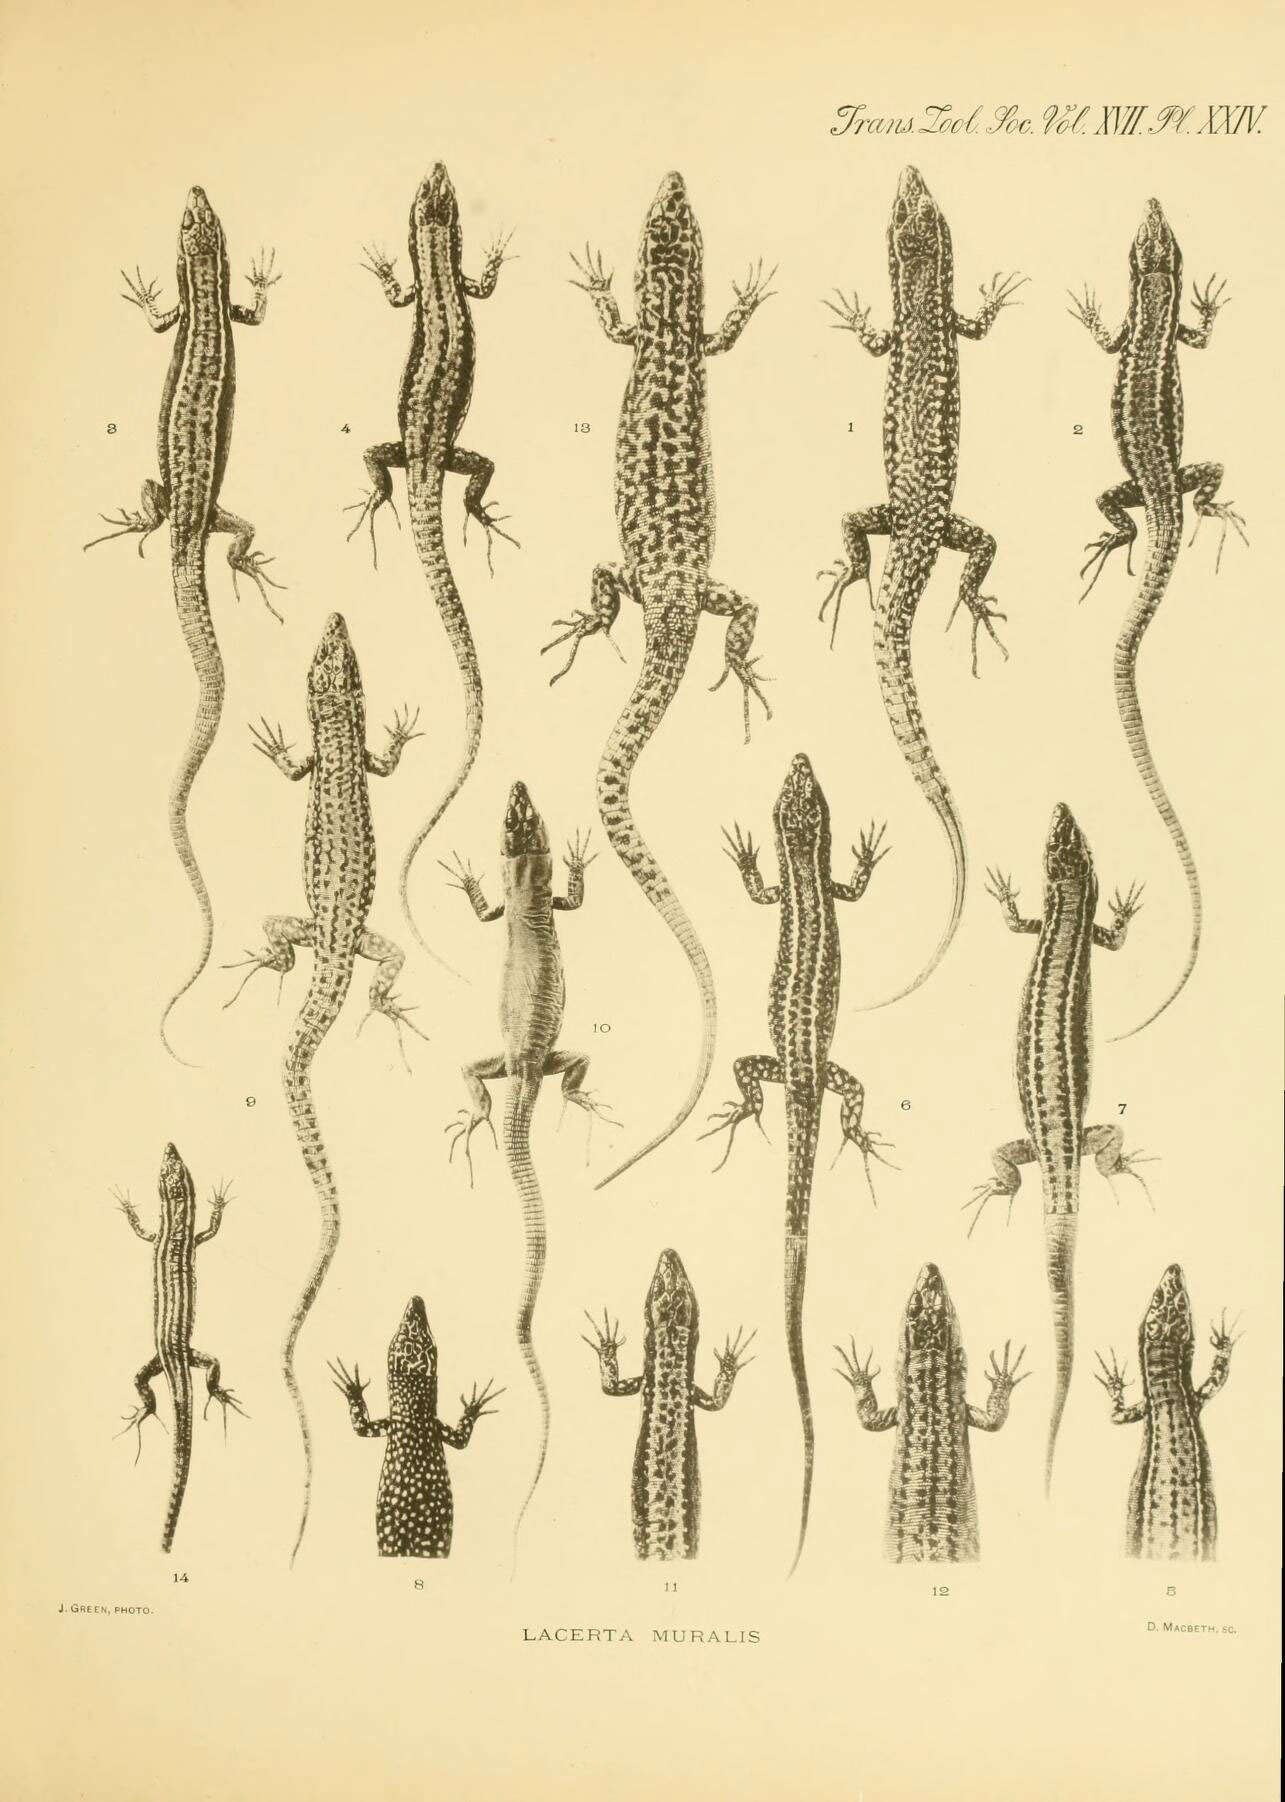 Image of Common wall lizard